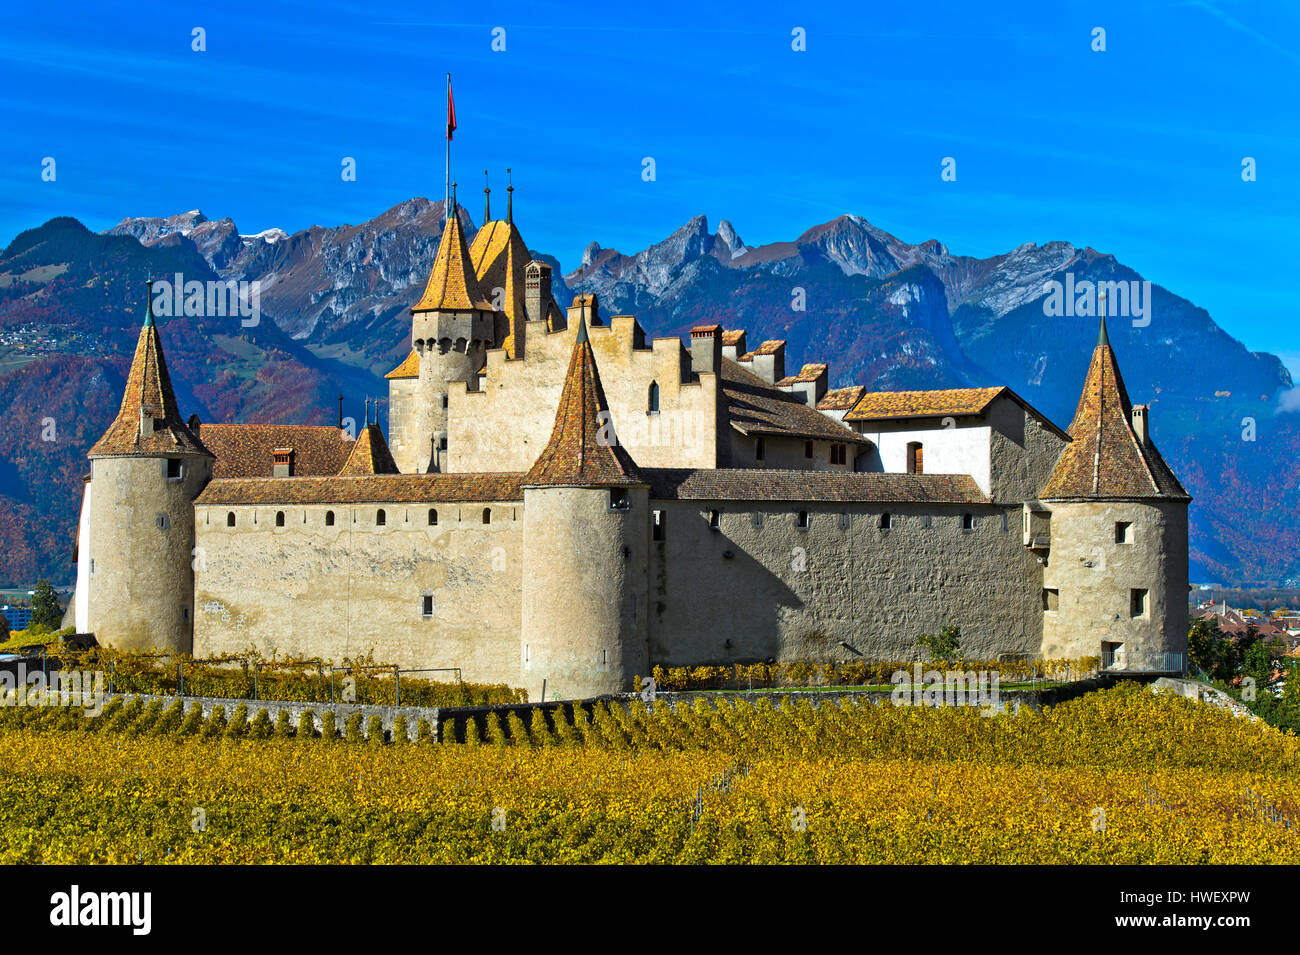 uendelig Savant Postnummer Vine and wine museum Aigle Castle, Chateau d'Aigle, Aigle, Vaud,  Switzerland Stock Photo - Alamy